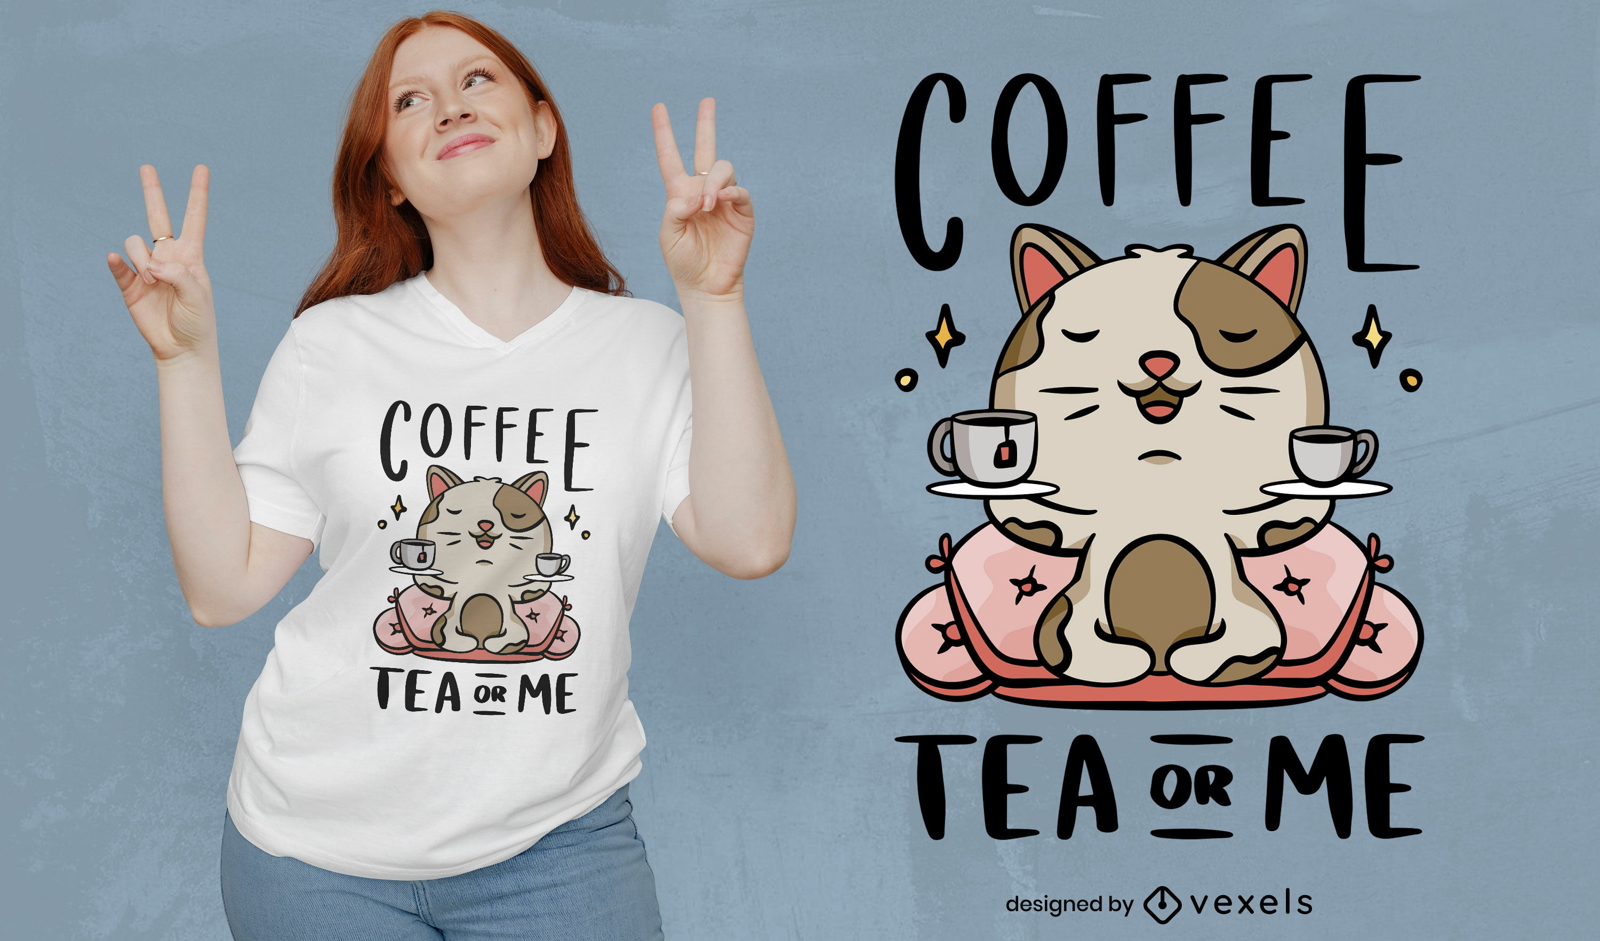 Dise?o lindo de la camiseta del gato del t? del caf?